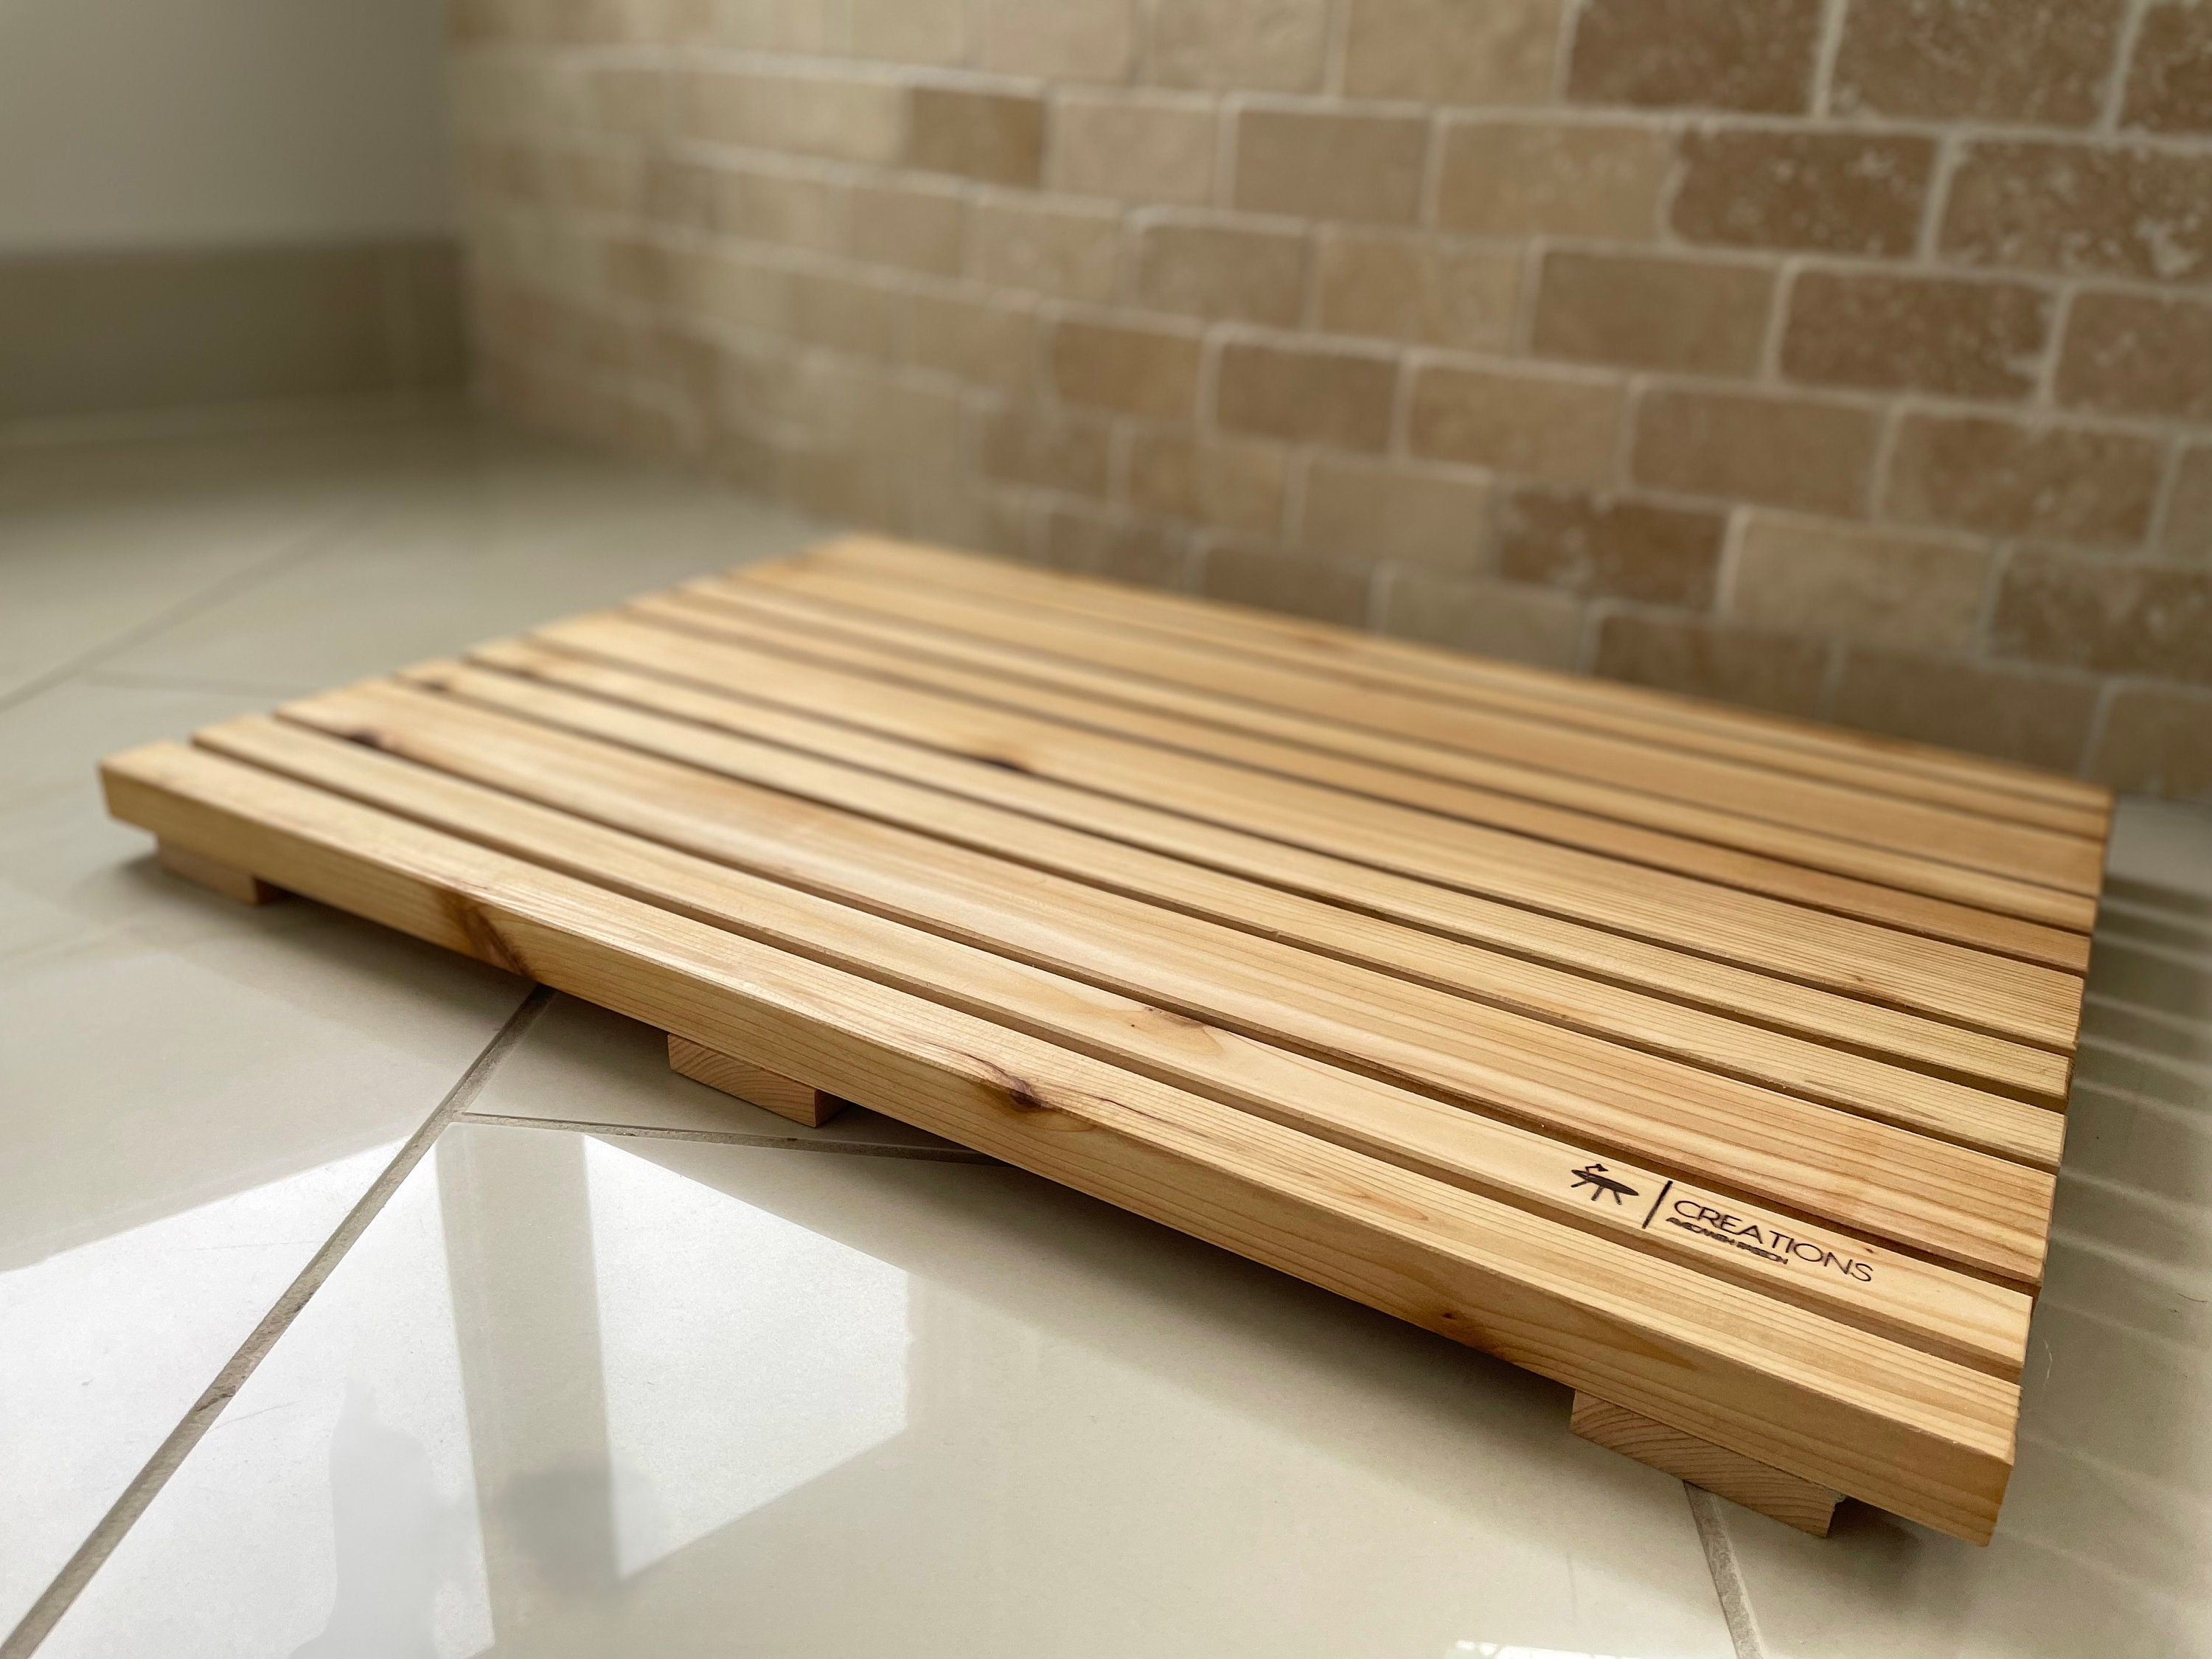 Bamboo Bath Mat Bathroom Runner Long Large Rugs Floor Wood Shower Bathtub  Waterproof Non Slip Accessories 16x48 Inch Easy to Clean, Natural, 1 pc